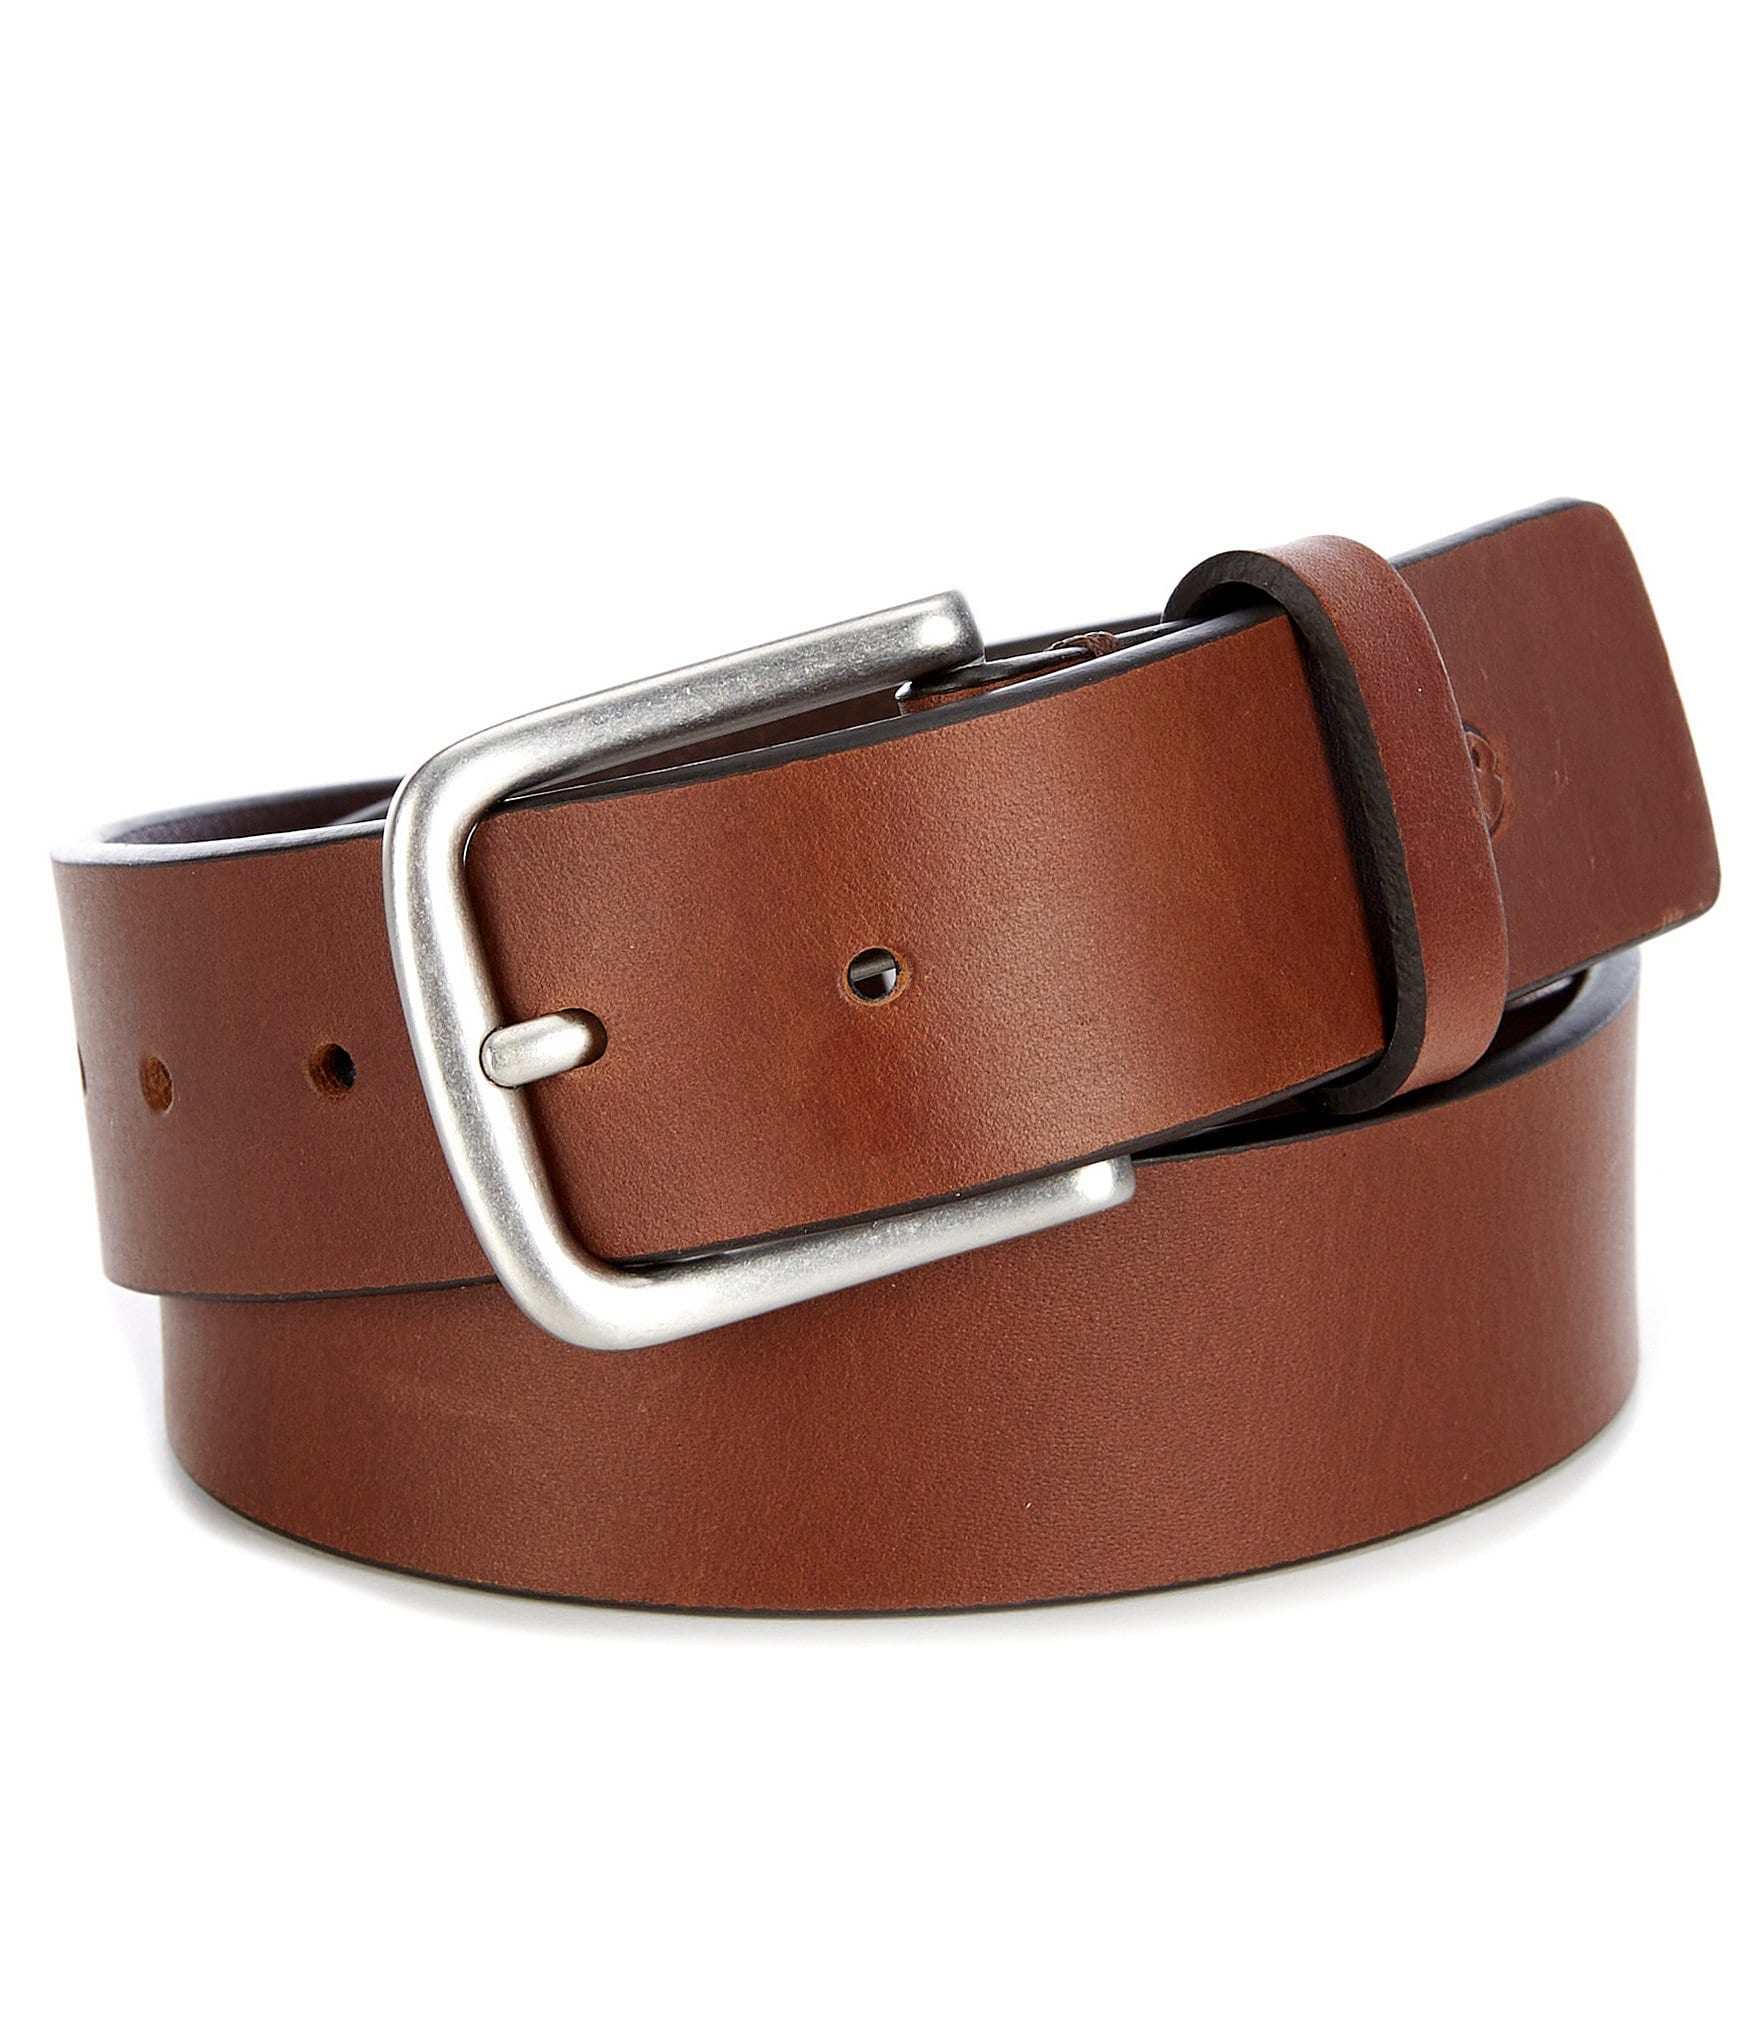 Boys brown leather belt, Kids brown belt plate buckle belt